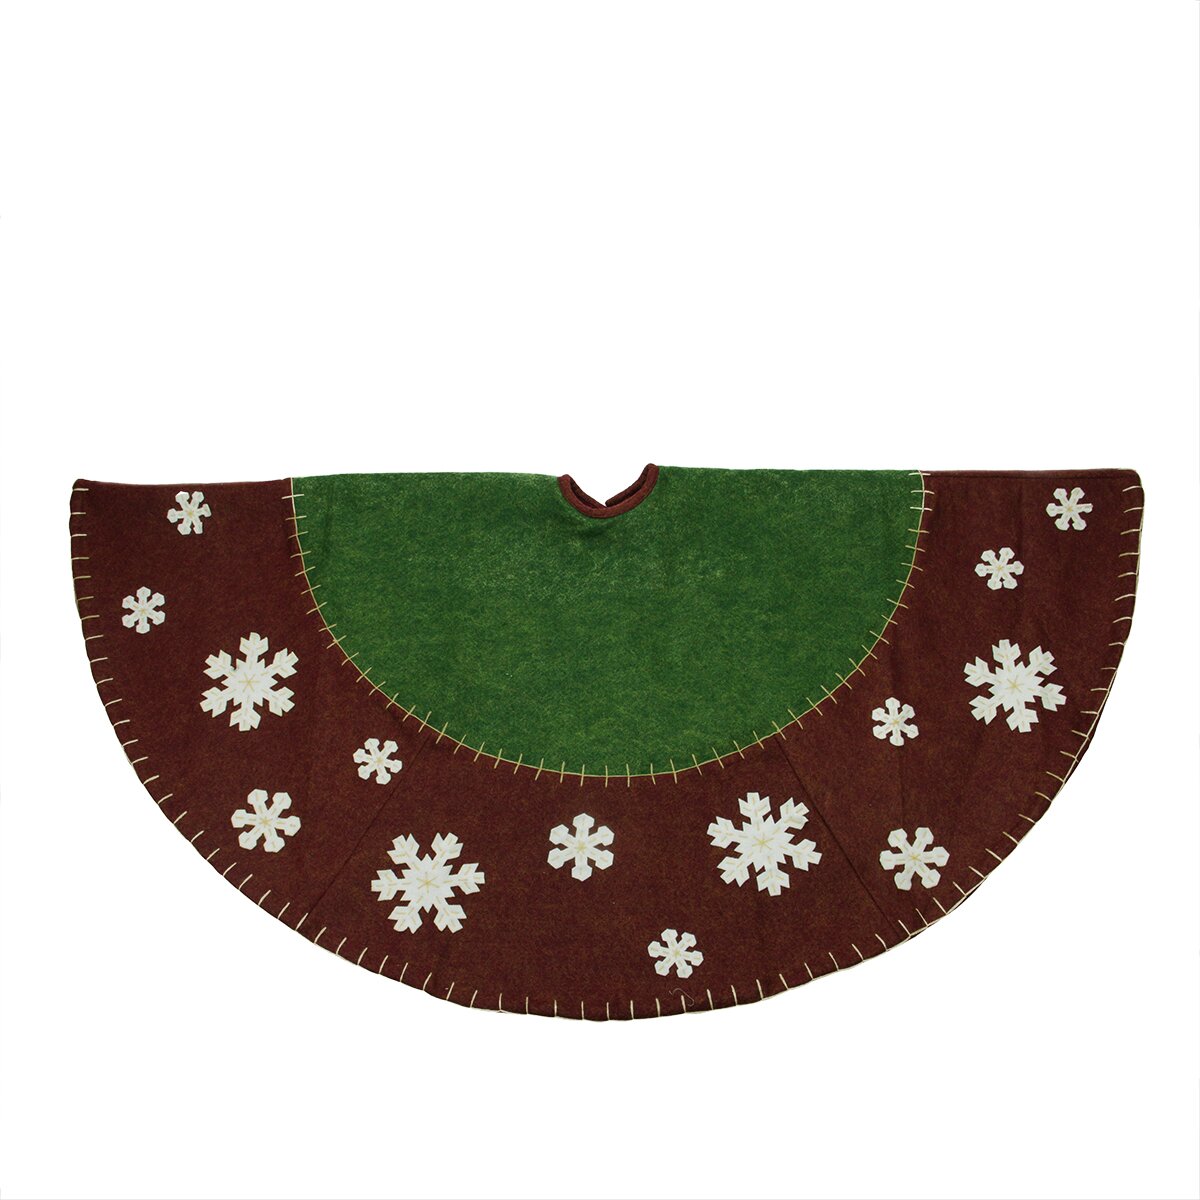 Country Christmas Tree Skirt with Snowflake Appliques | Wayfair